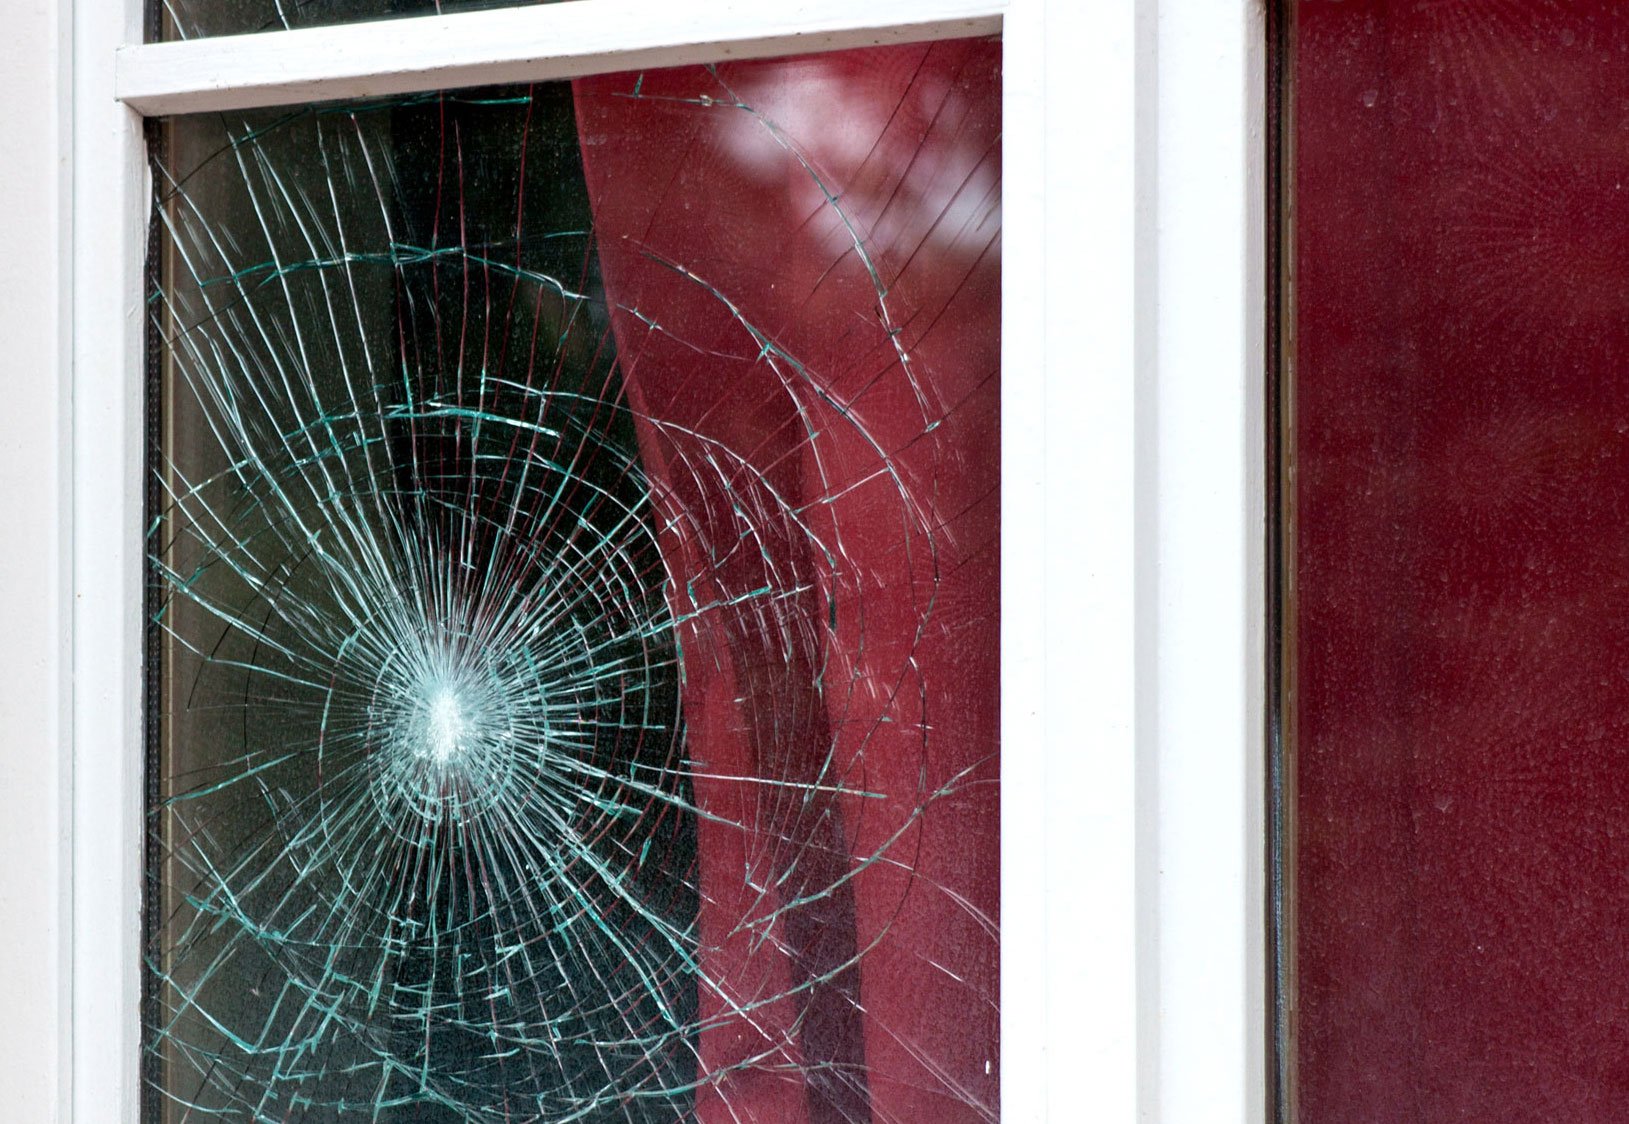 Разбил окно звук. Разбитое окно. Разбитое стекло в окне. Разбитое пластиковое окно. Разбитый стеклопакет.